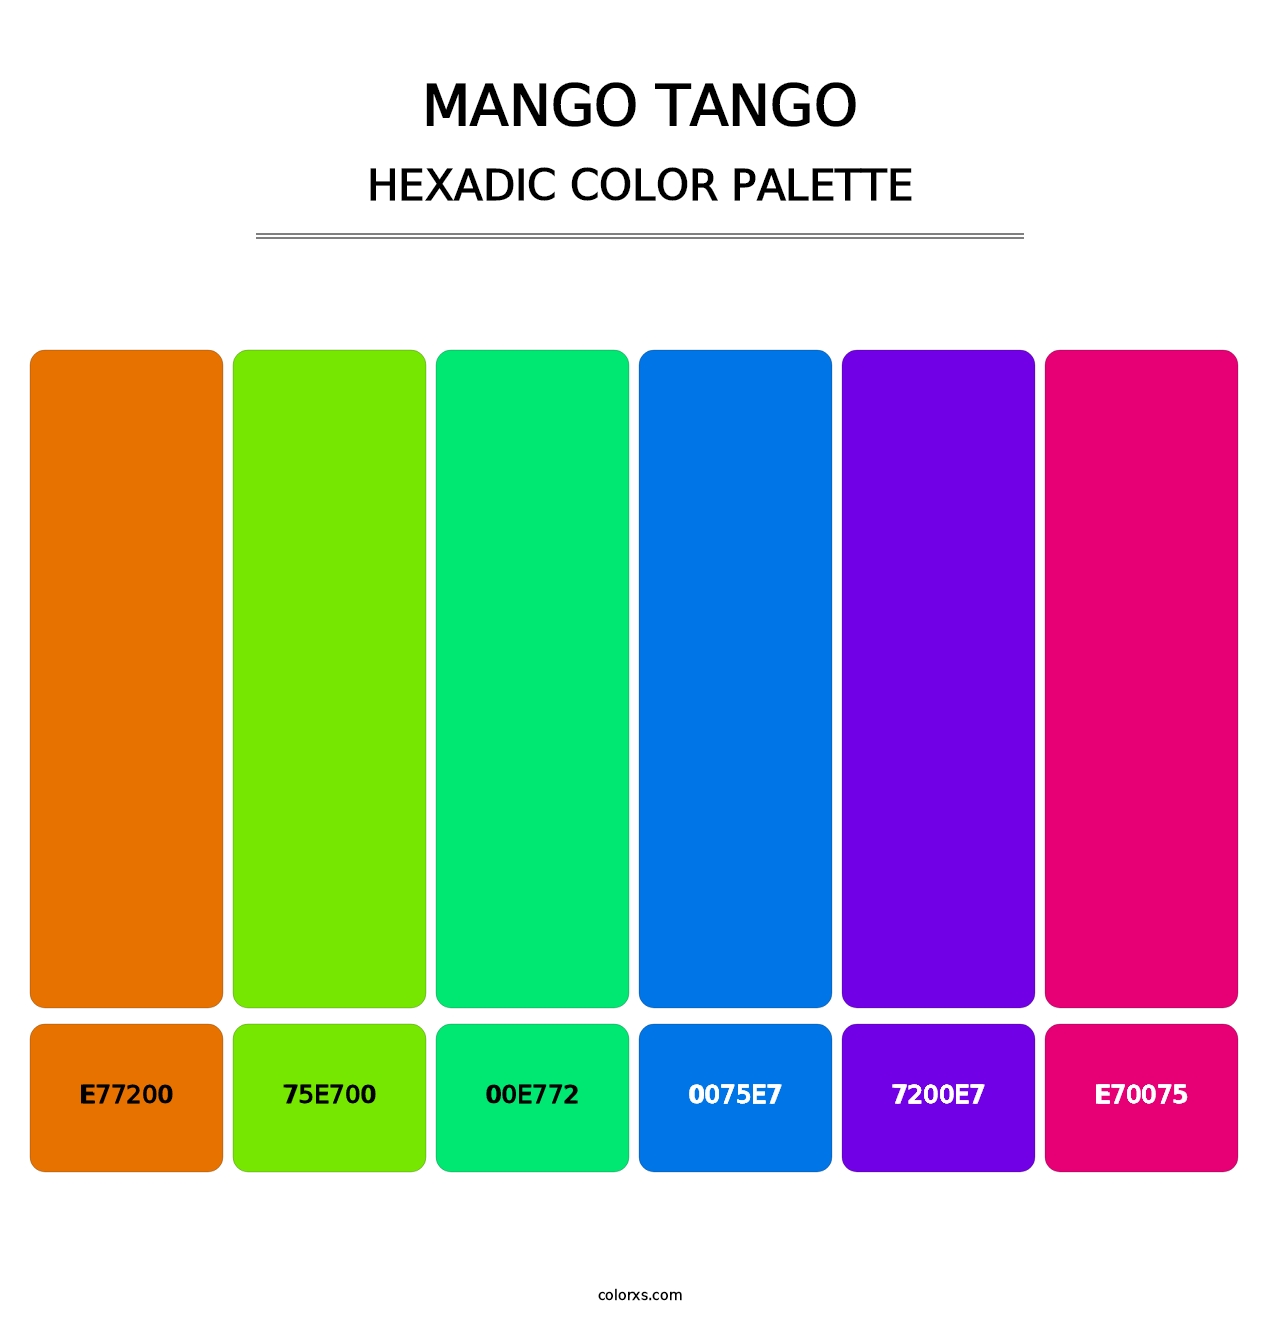 Mango Tango - Hexadic Color Palette